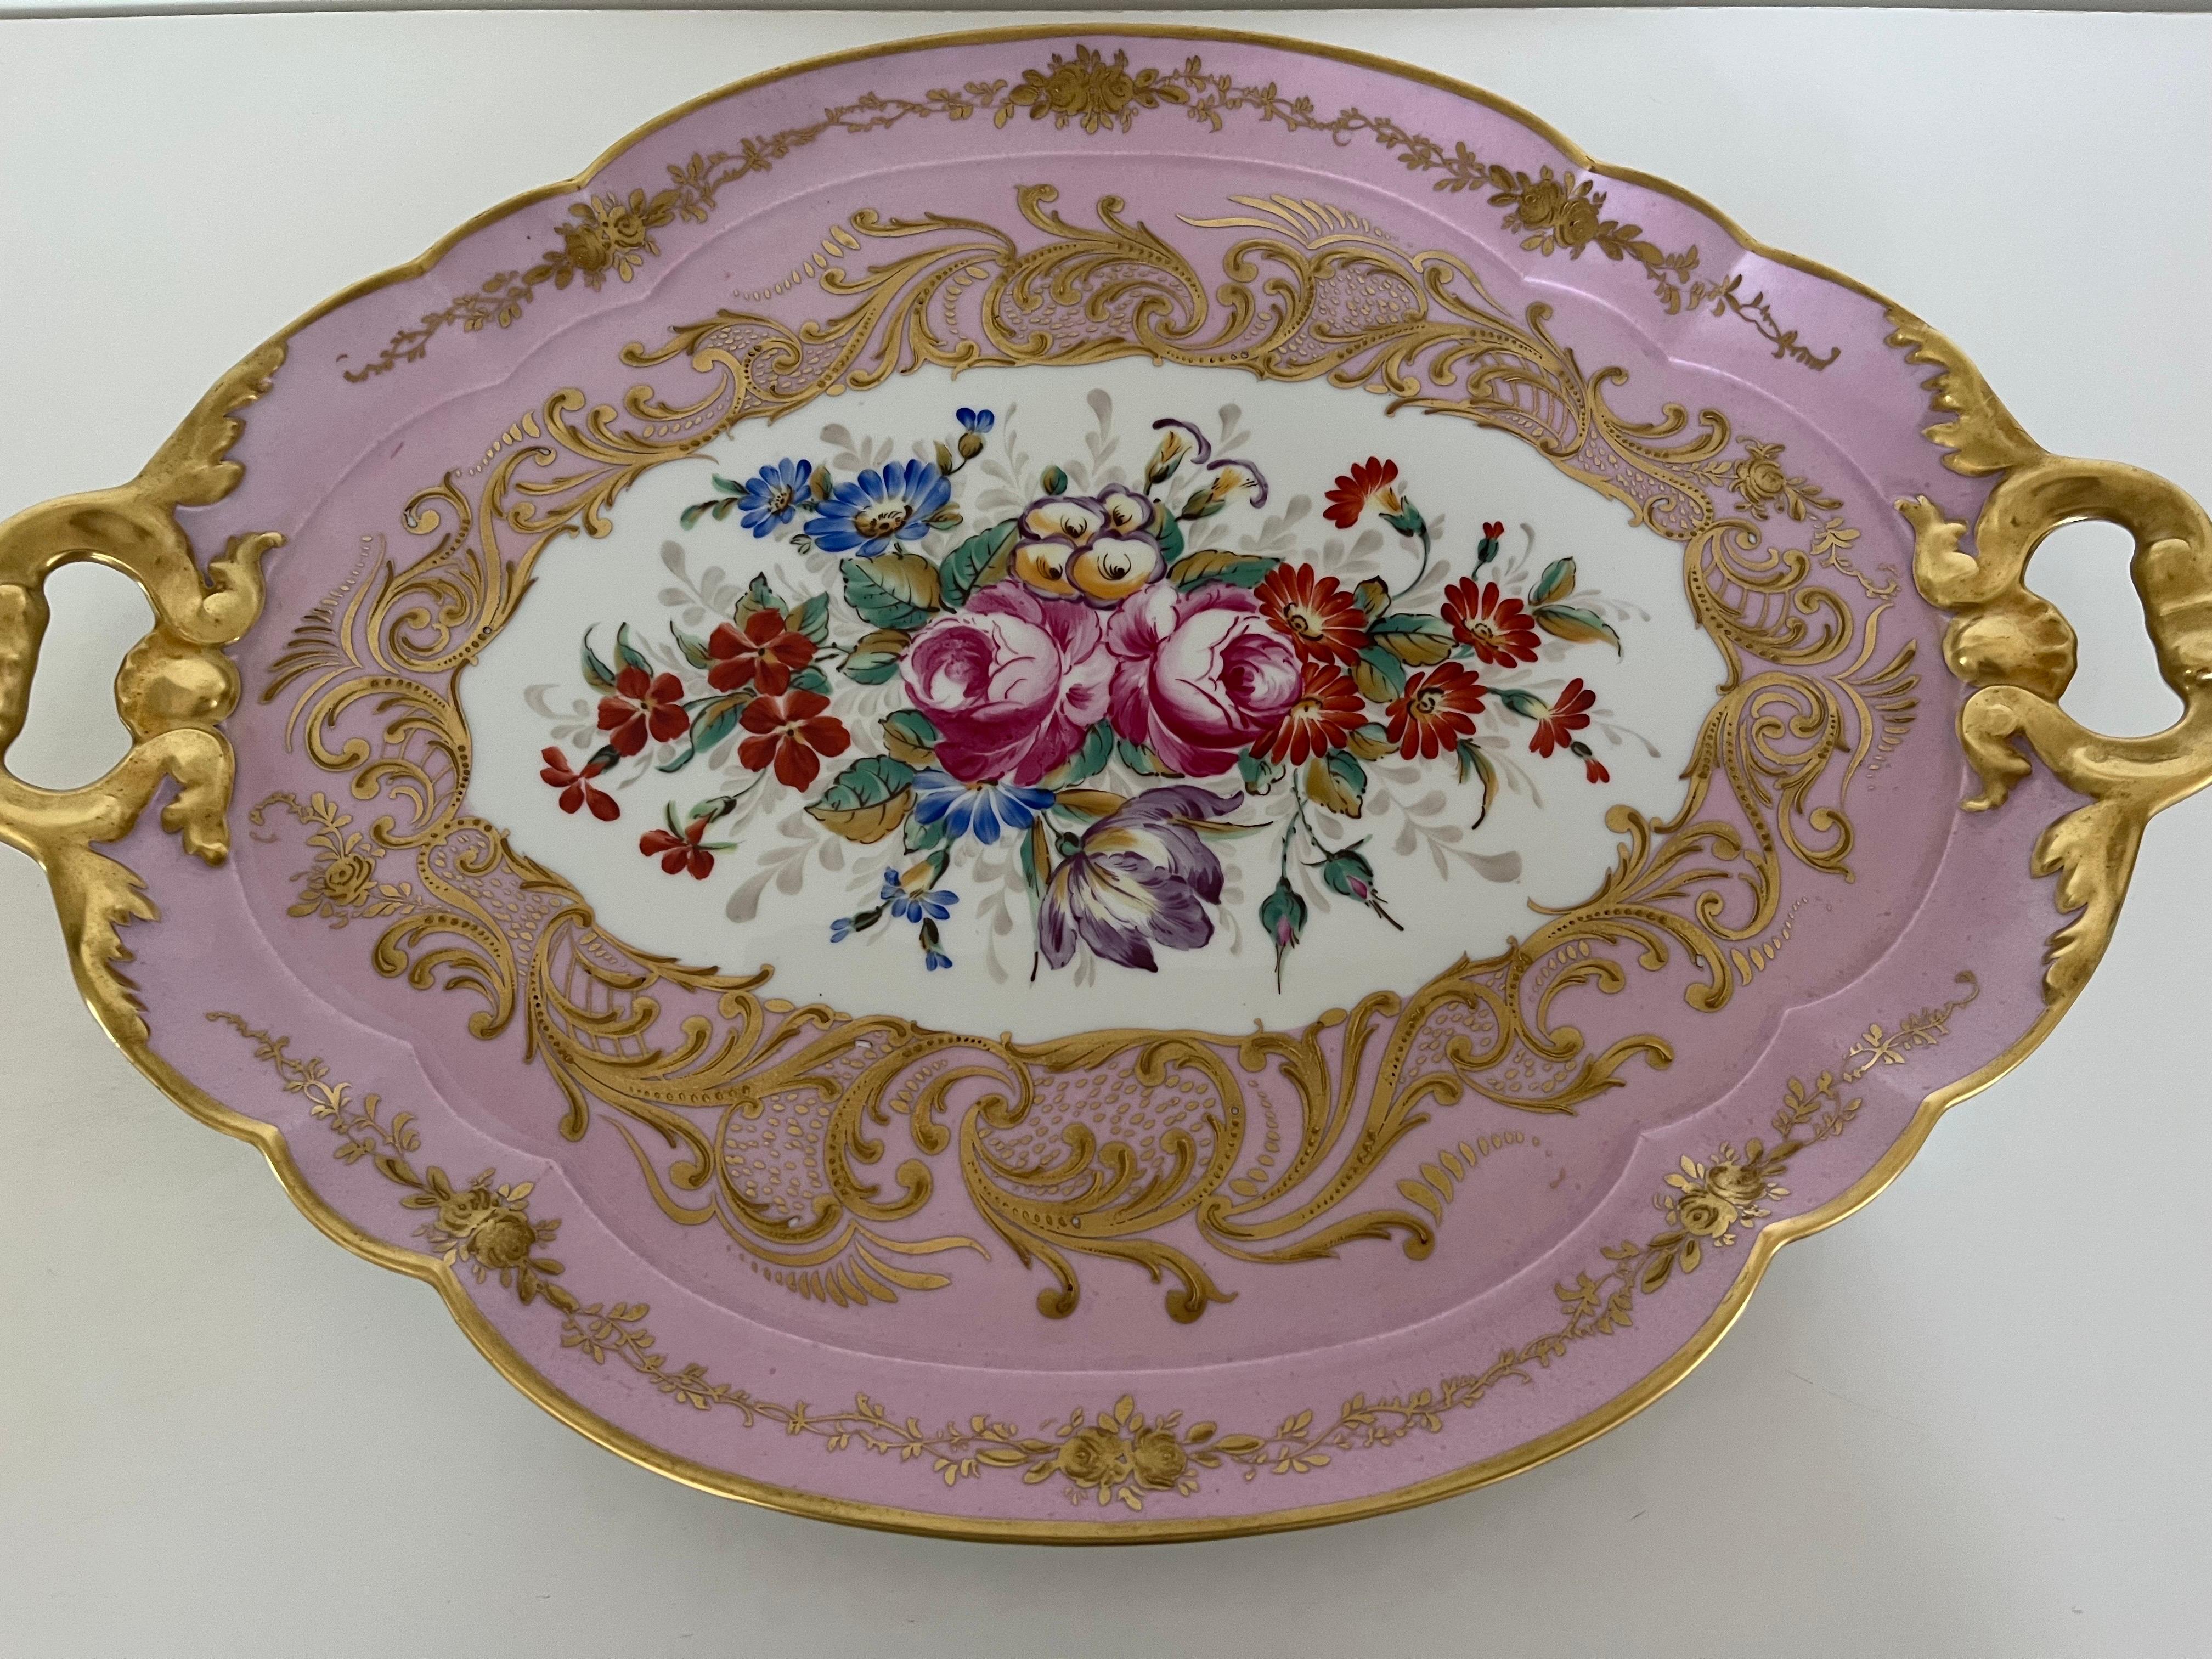 Ceramic Vassoio Rosa Limoges France Decorato a mano del '900 -Antiques- For Sale